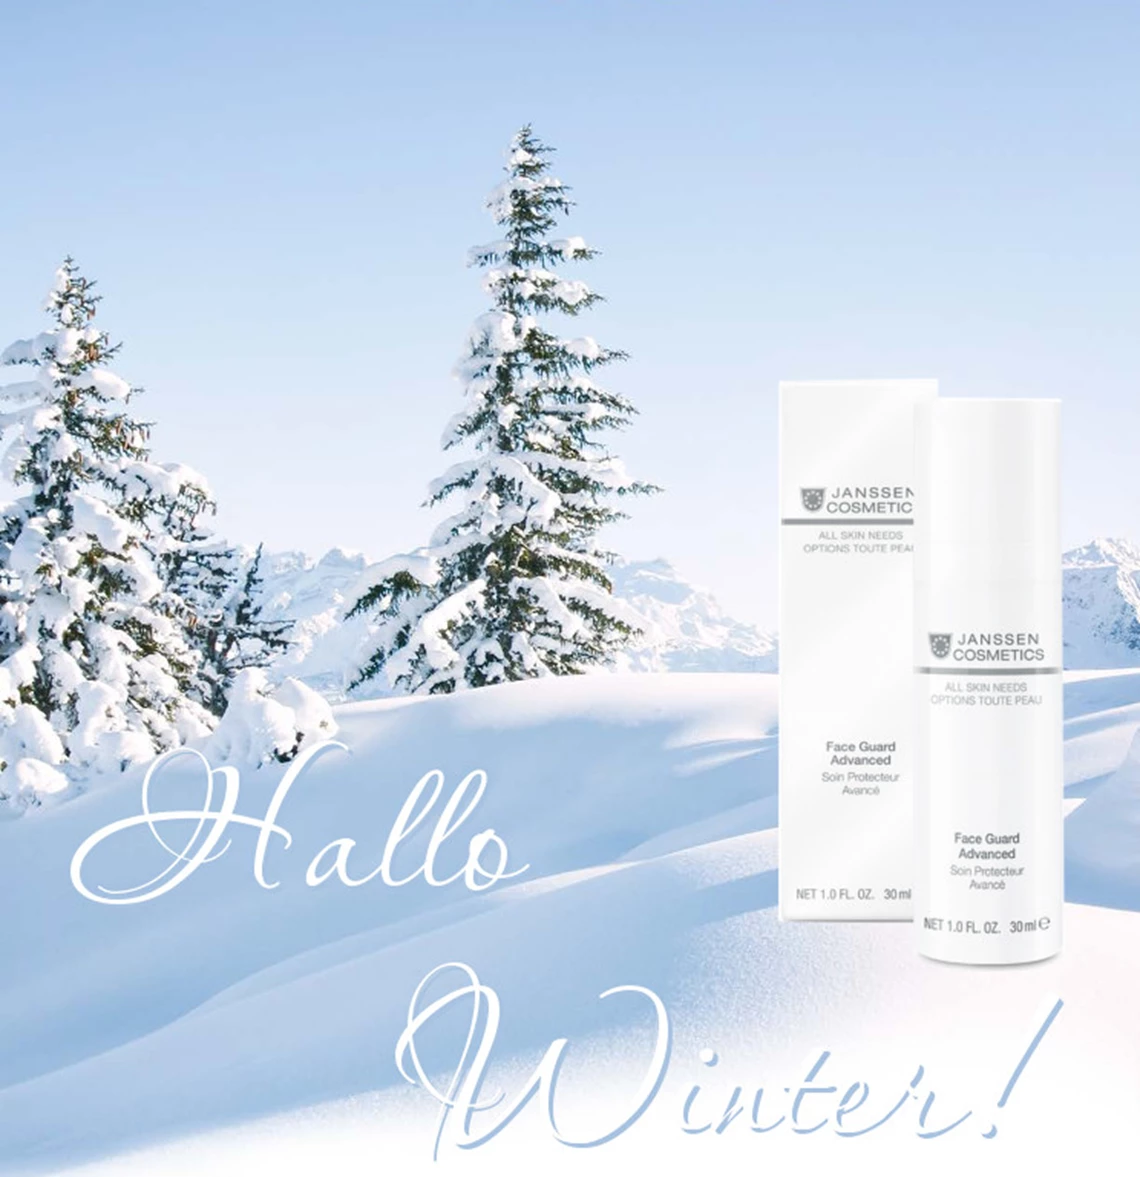 Hallo Winter mit Face Guard Advanced by Janssen Cosmetics